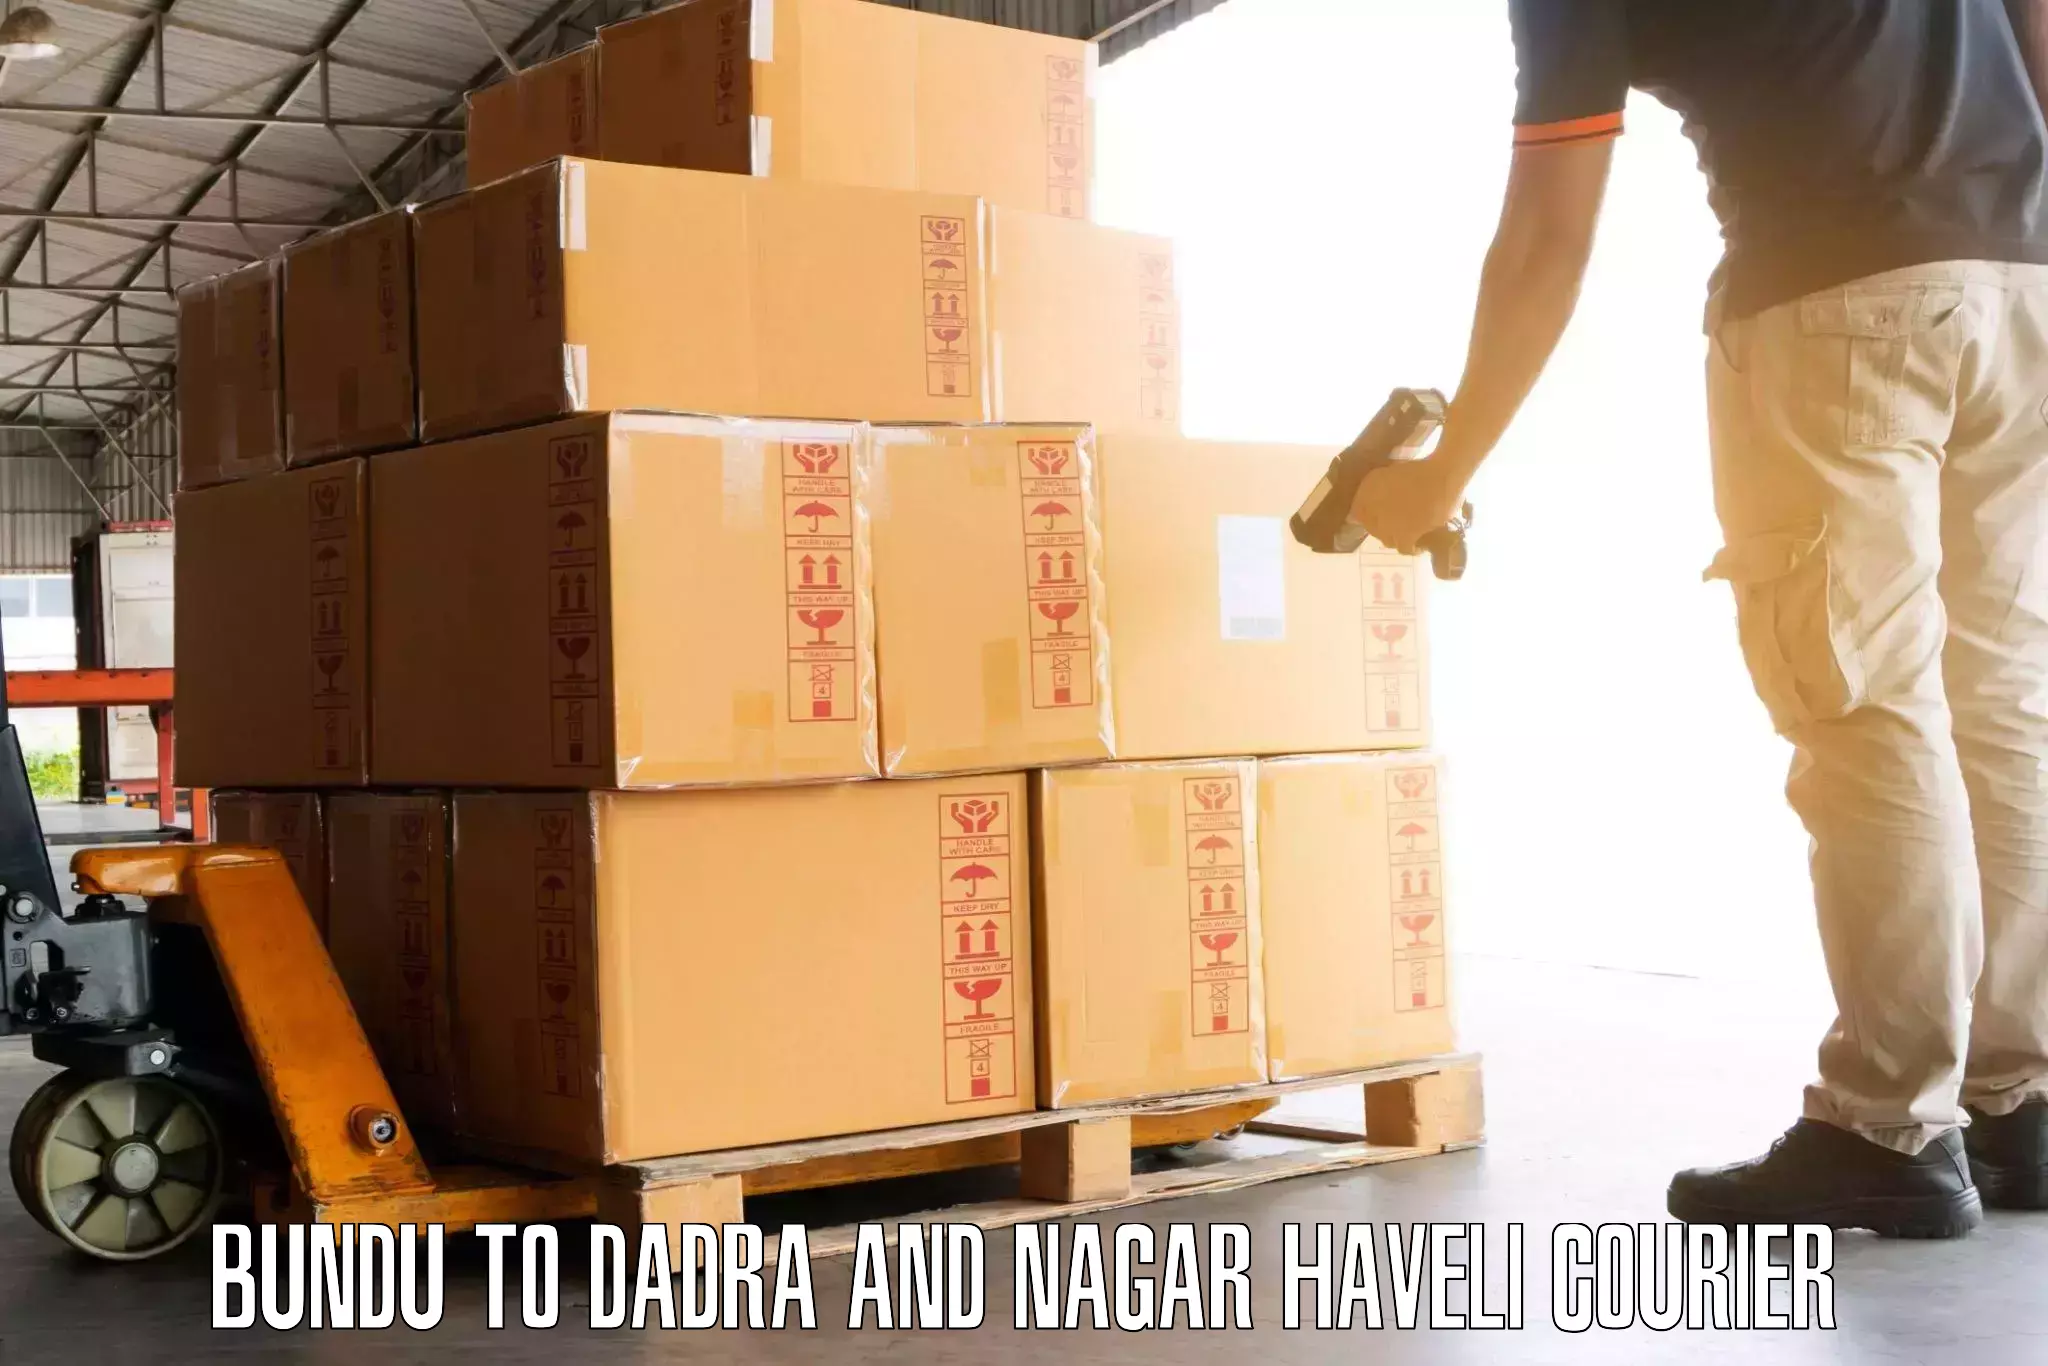 Luggage transport consultancy Bundu to Dadra and Nagar Haveli